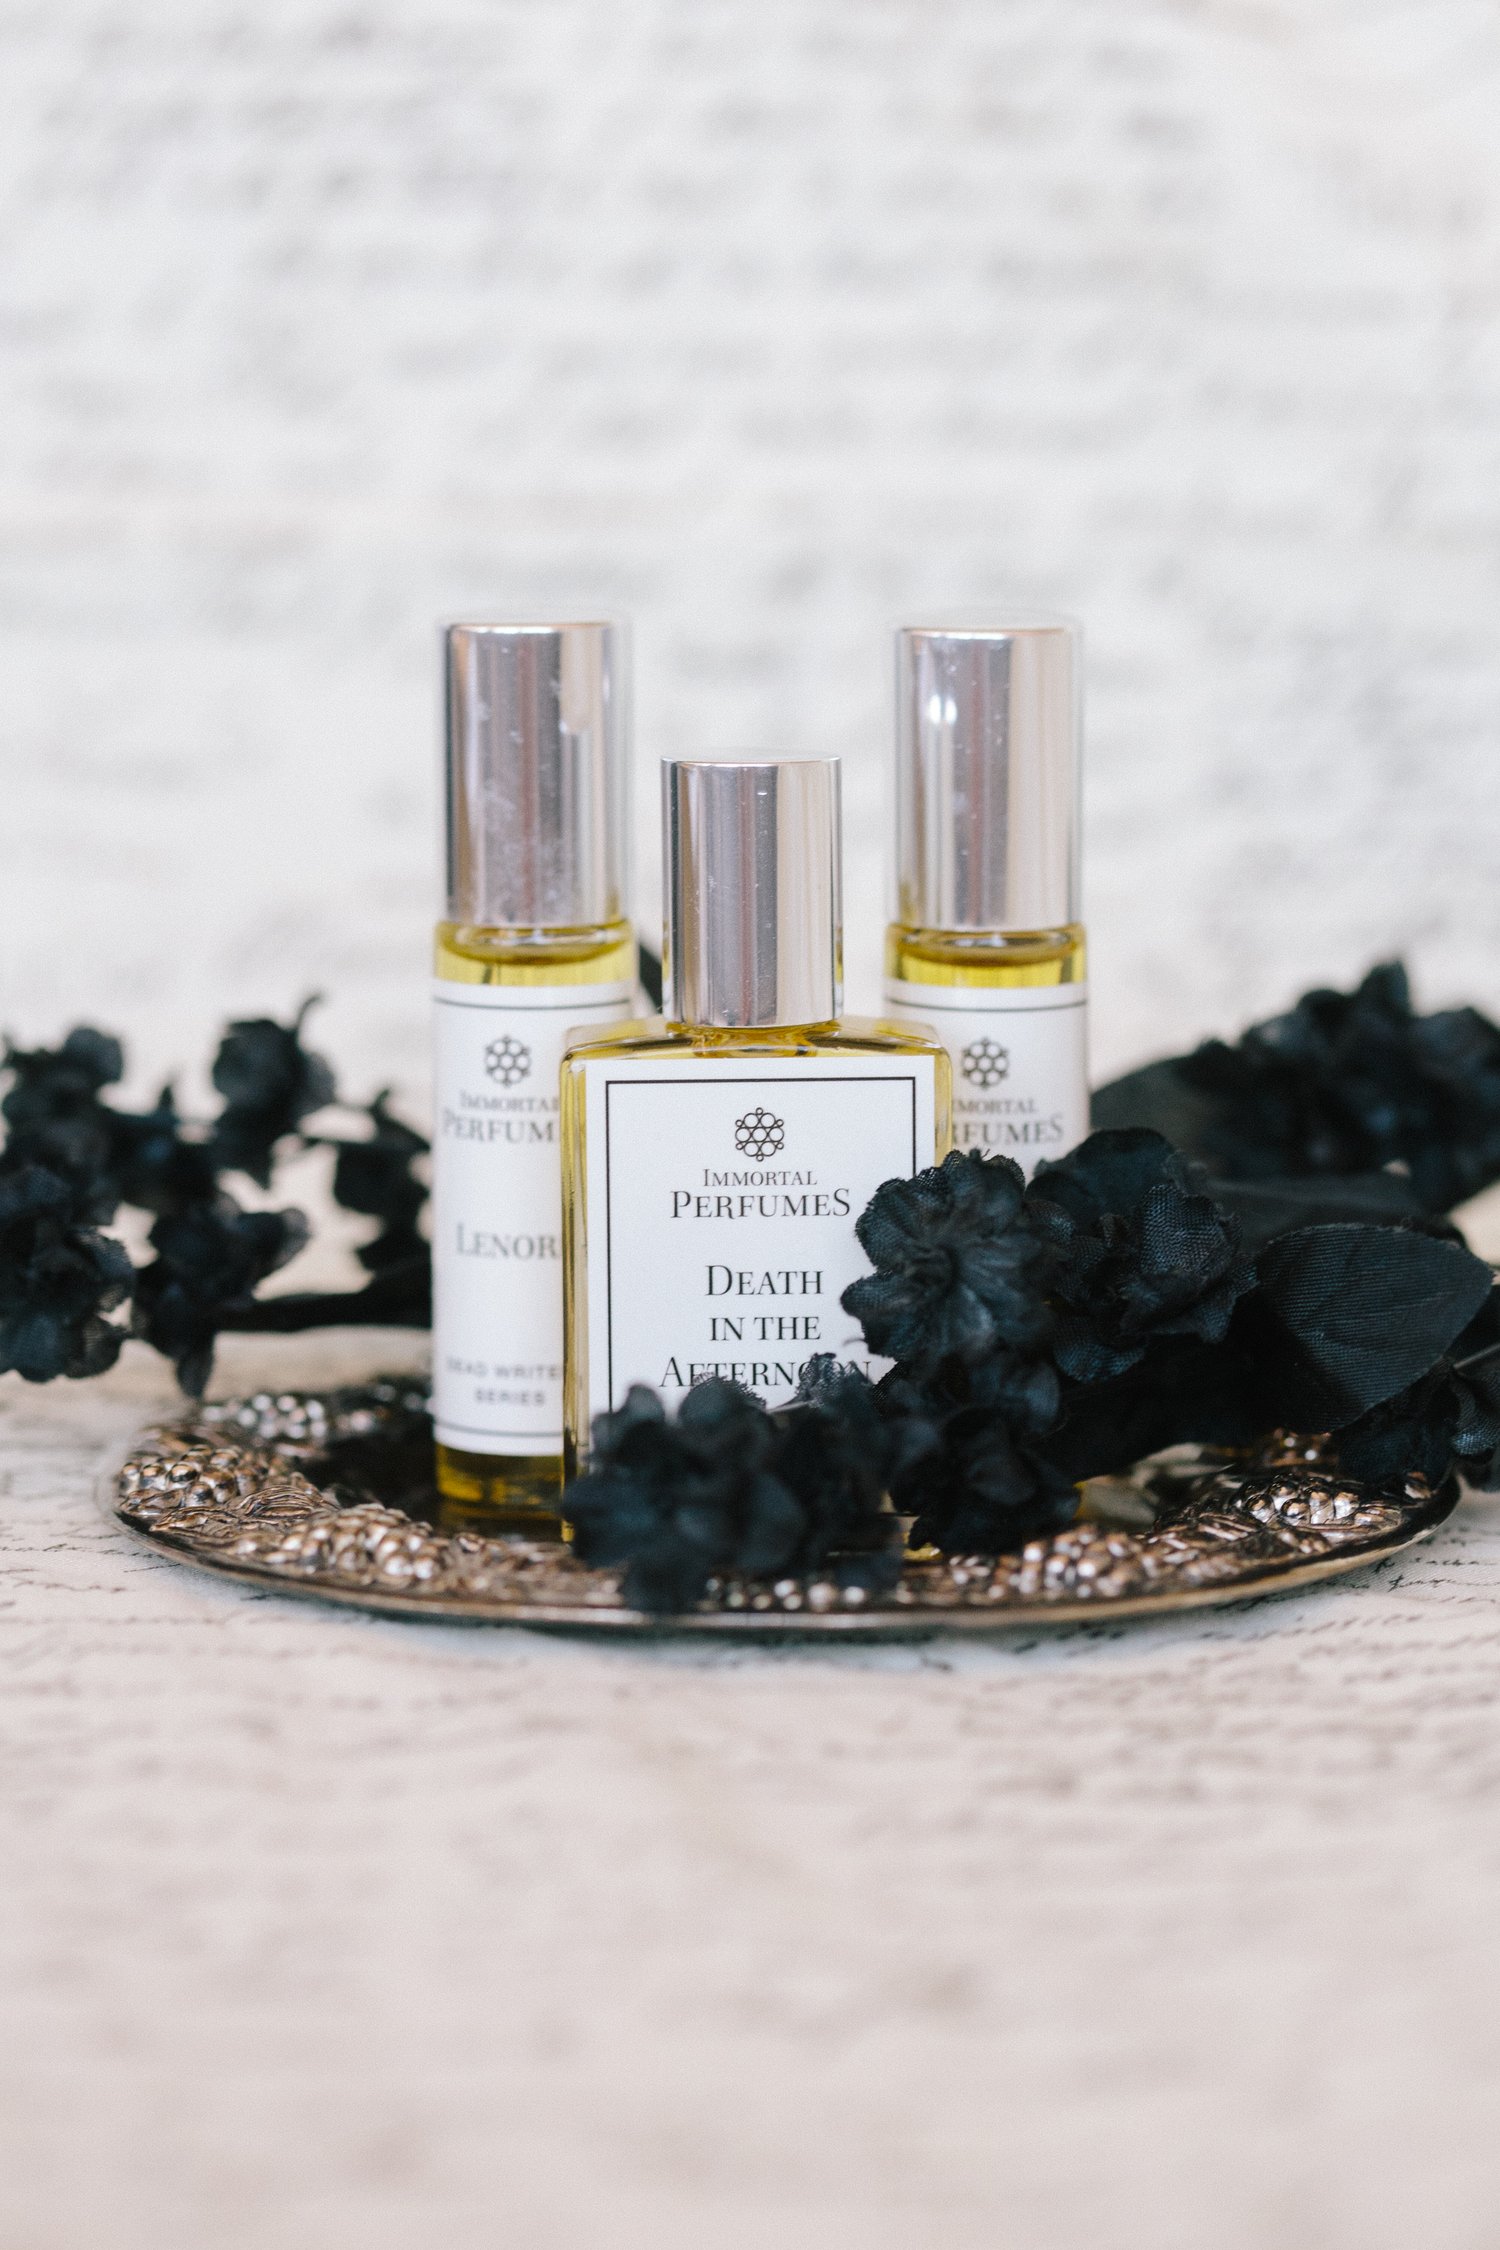 Theda Bara Perfume — Immortal Perfumes